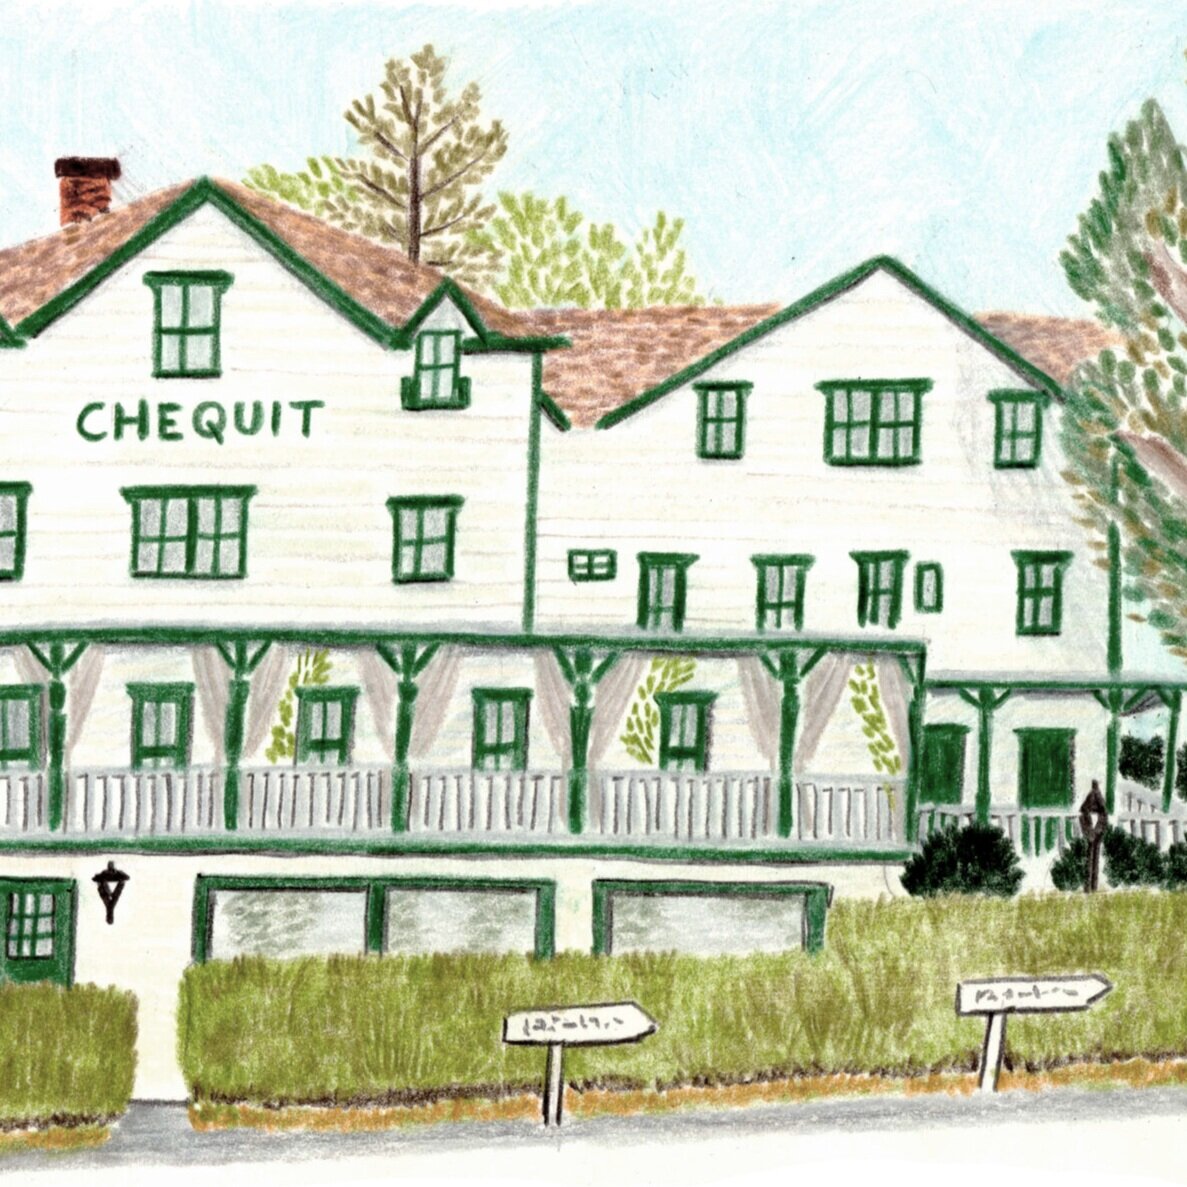 the Chequit